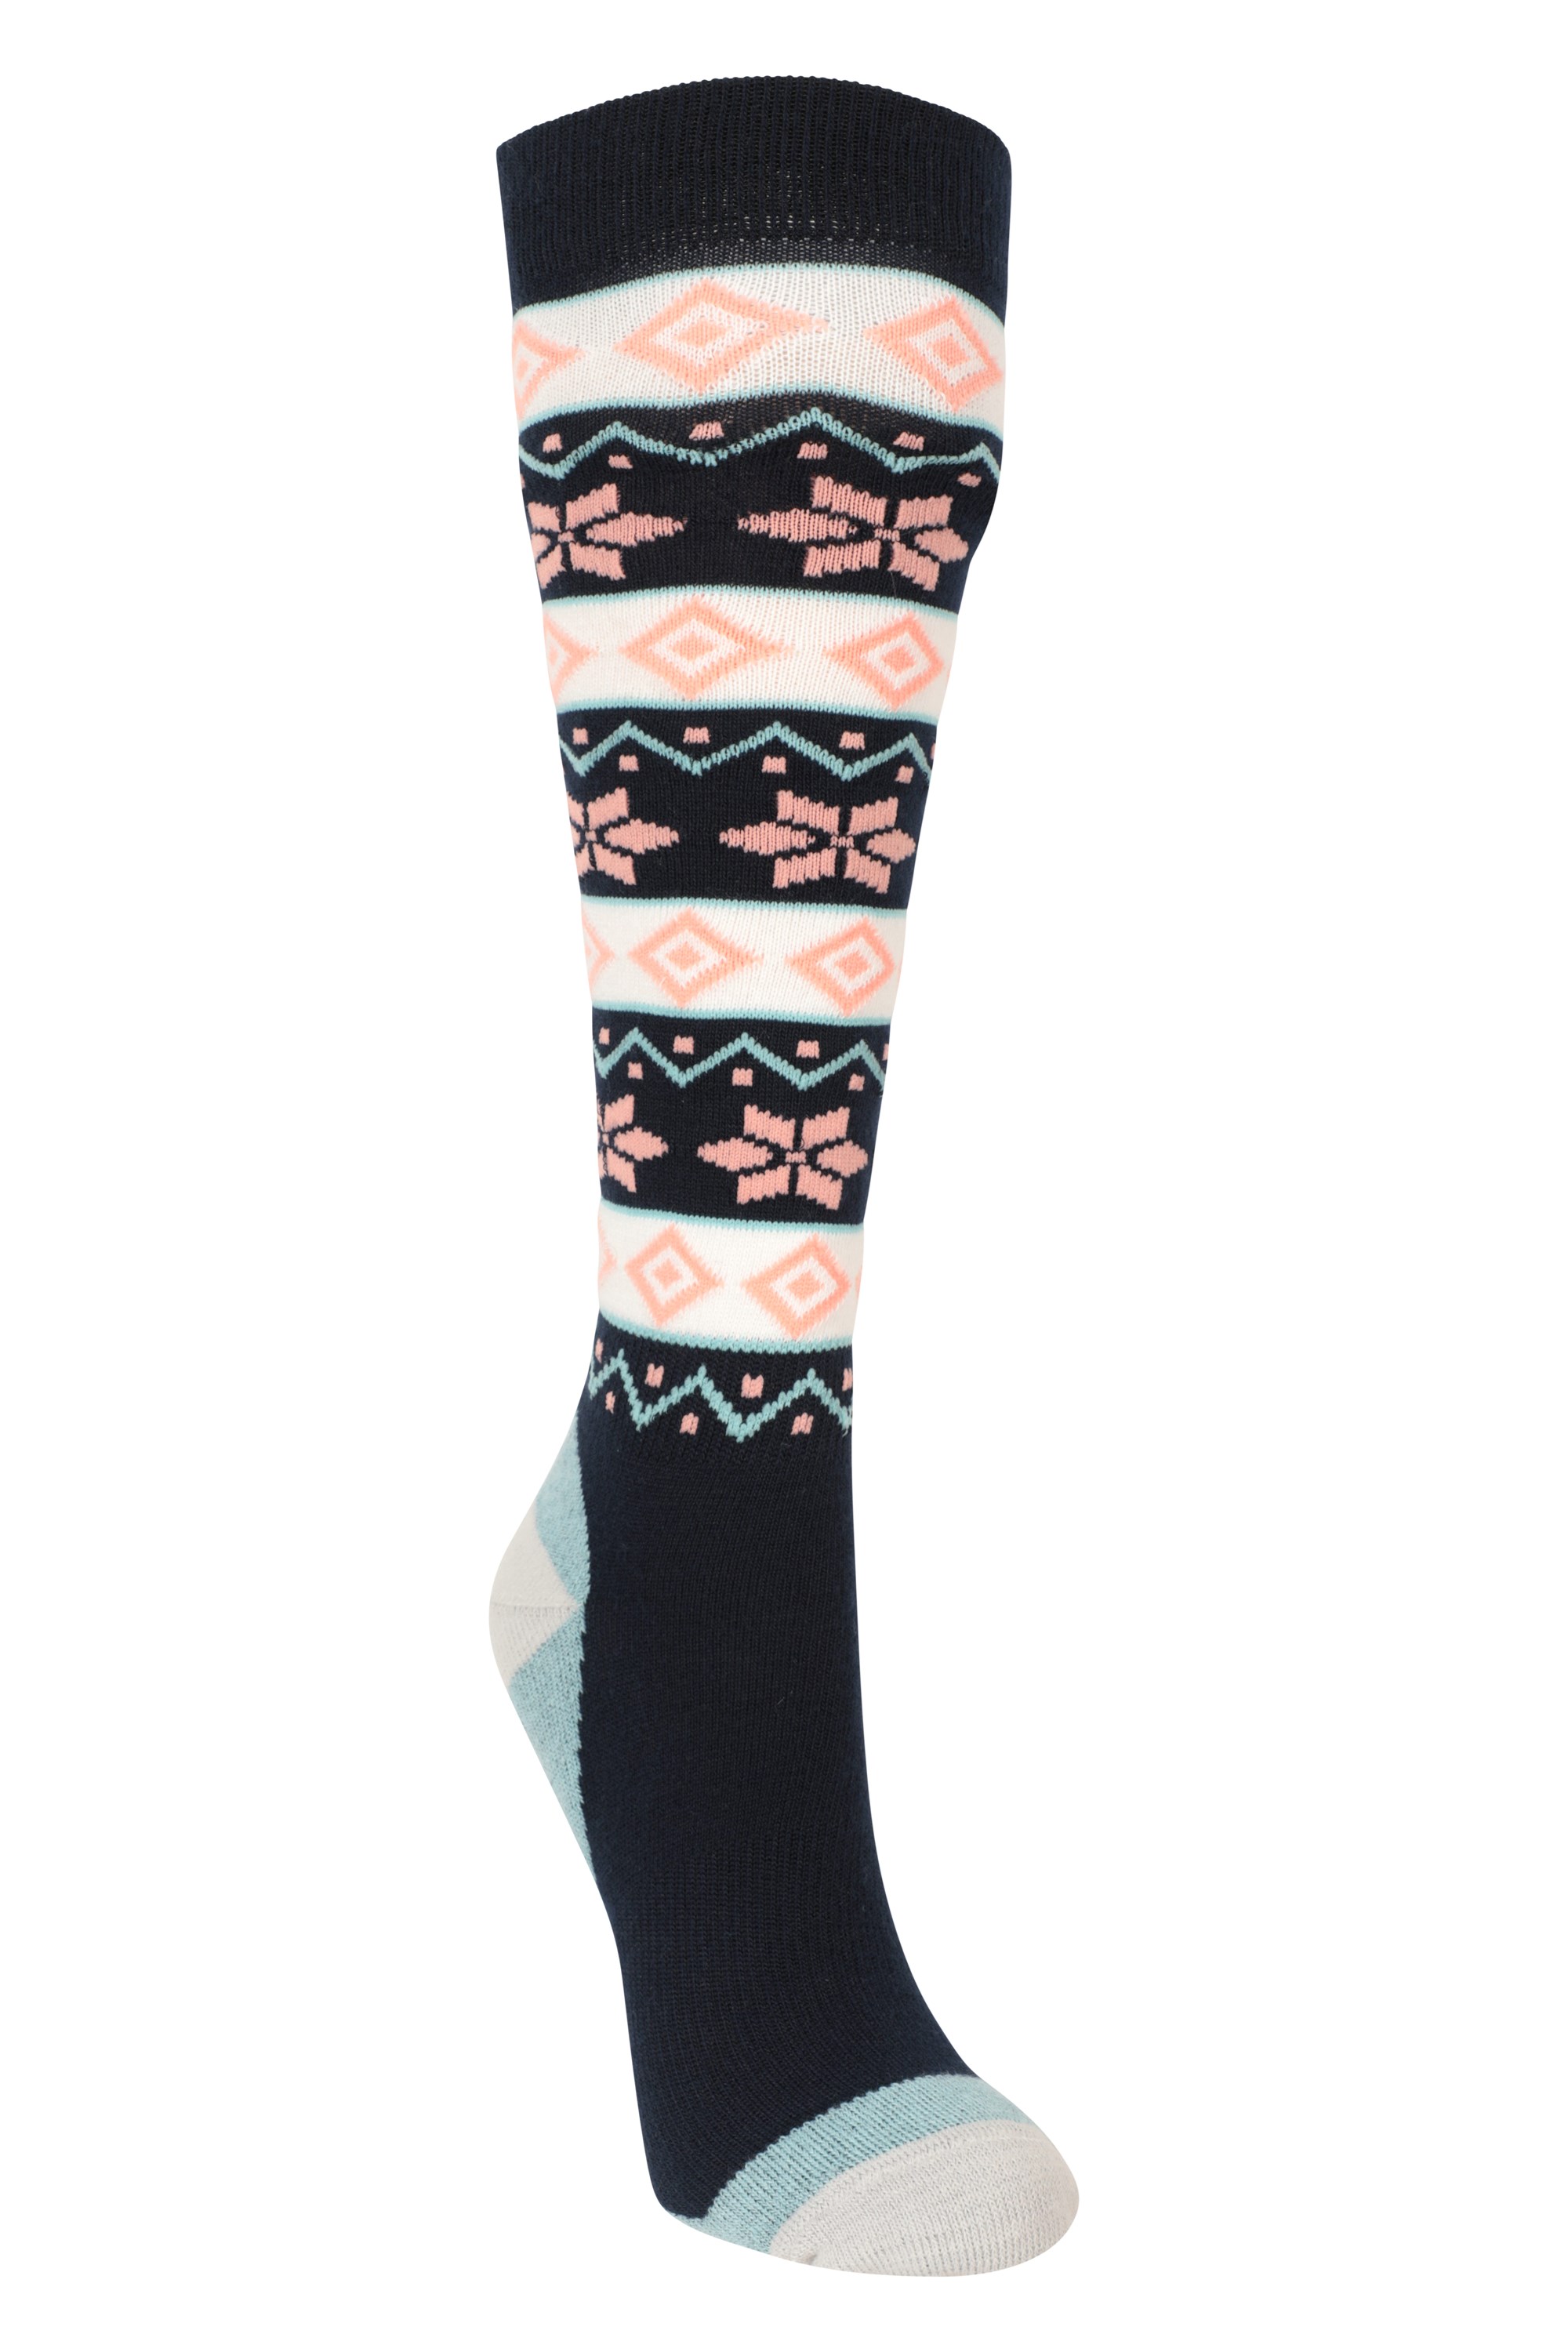 Womens Patterned Ski Socks - Navy